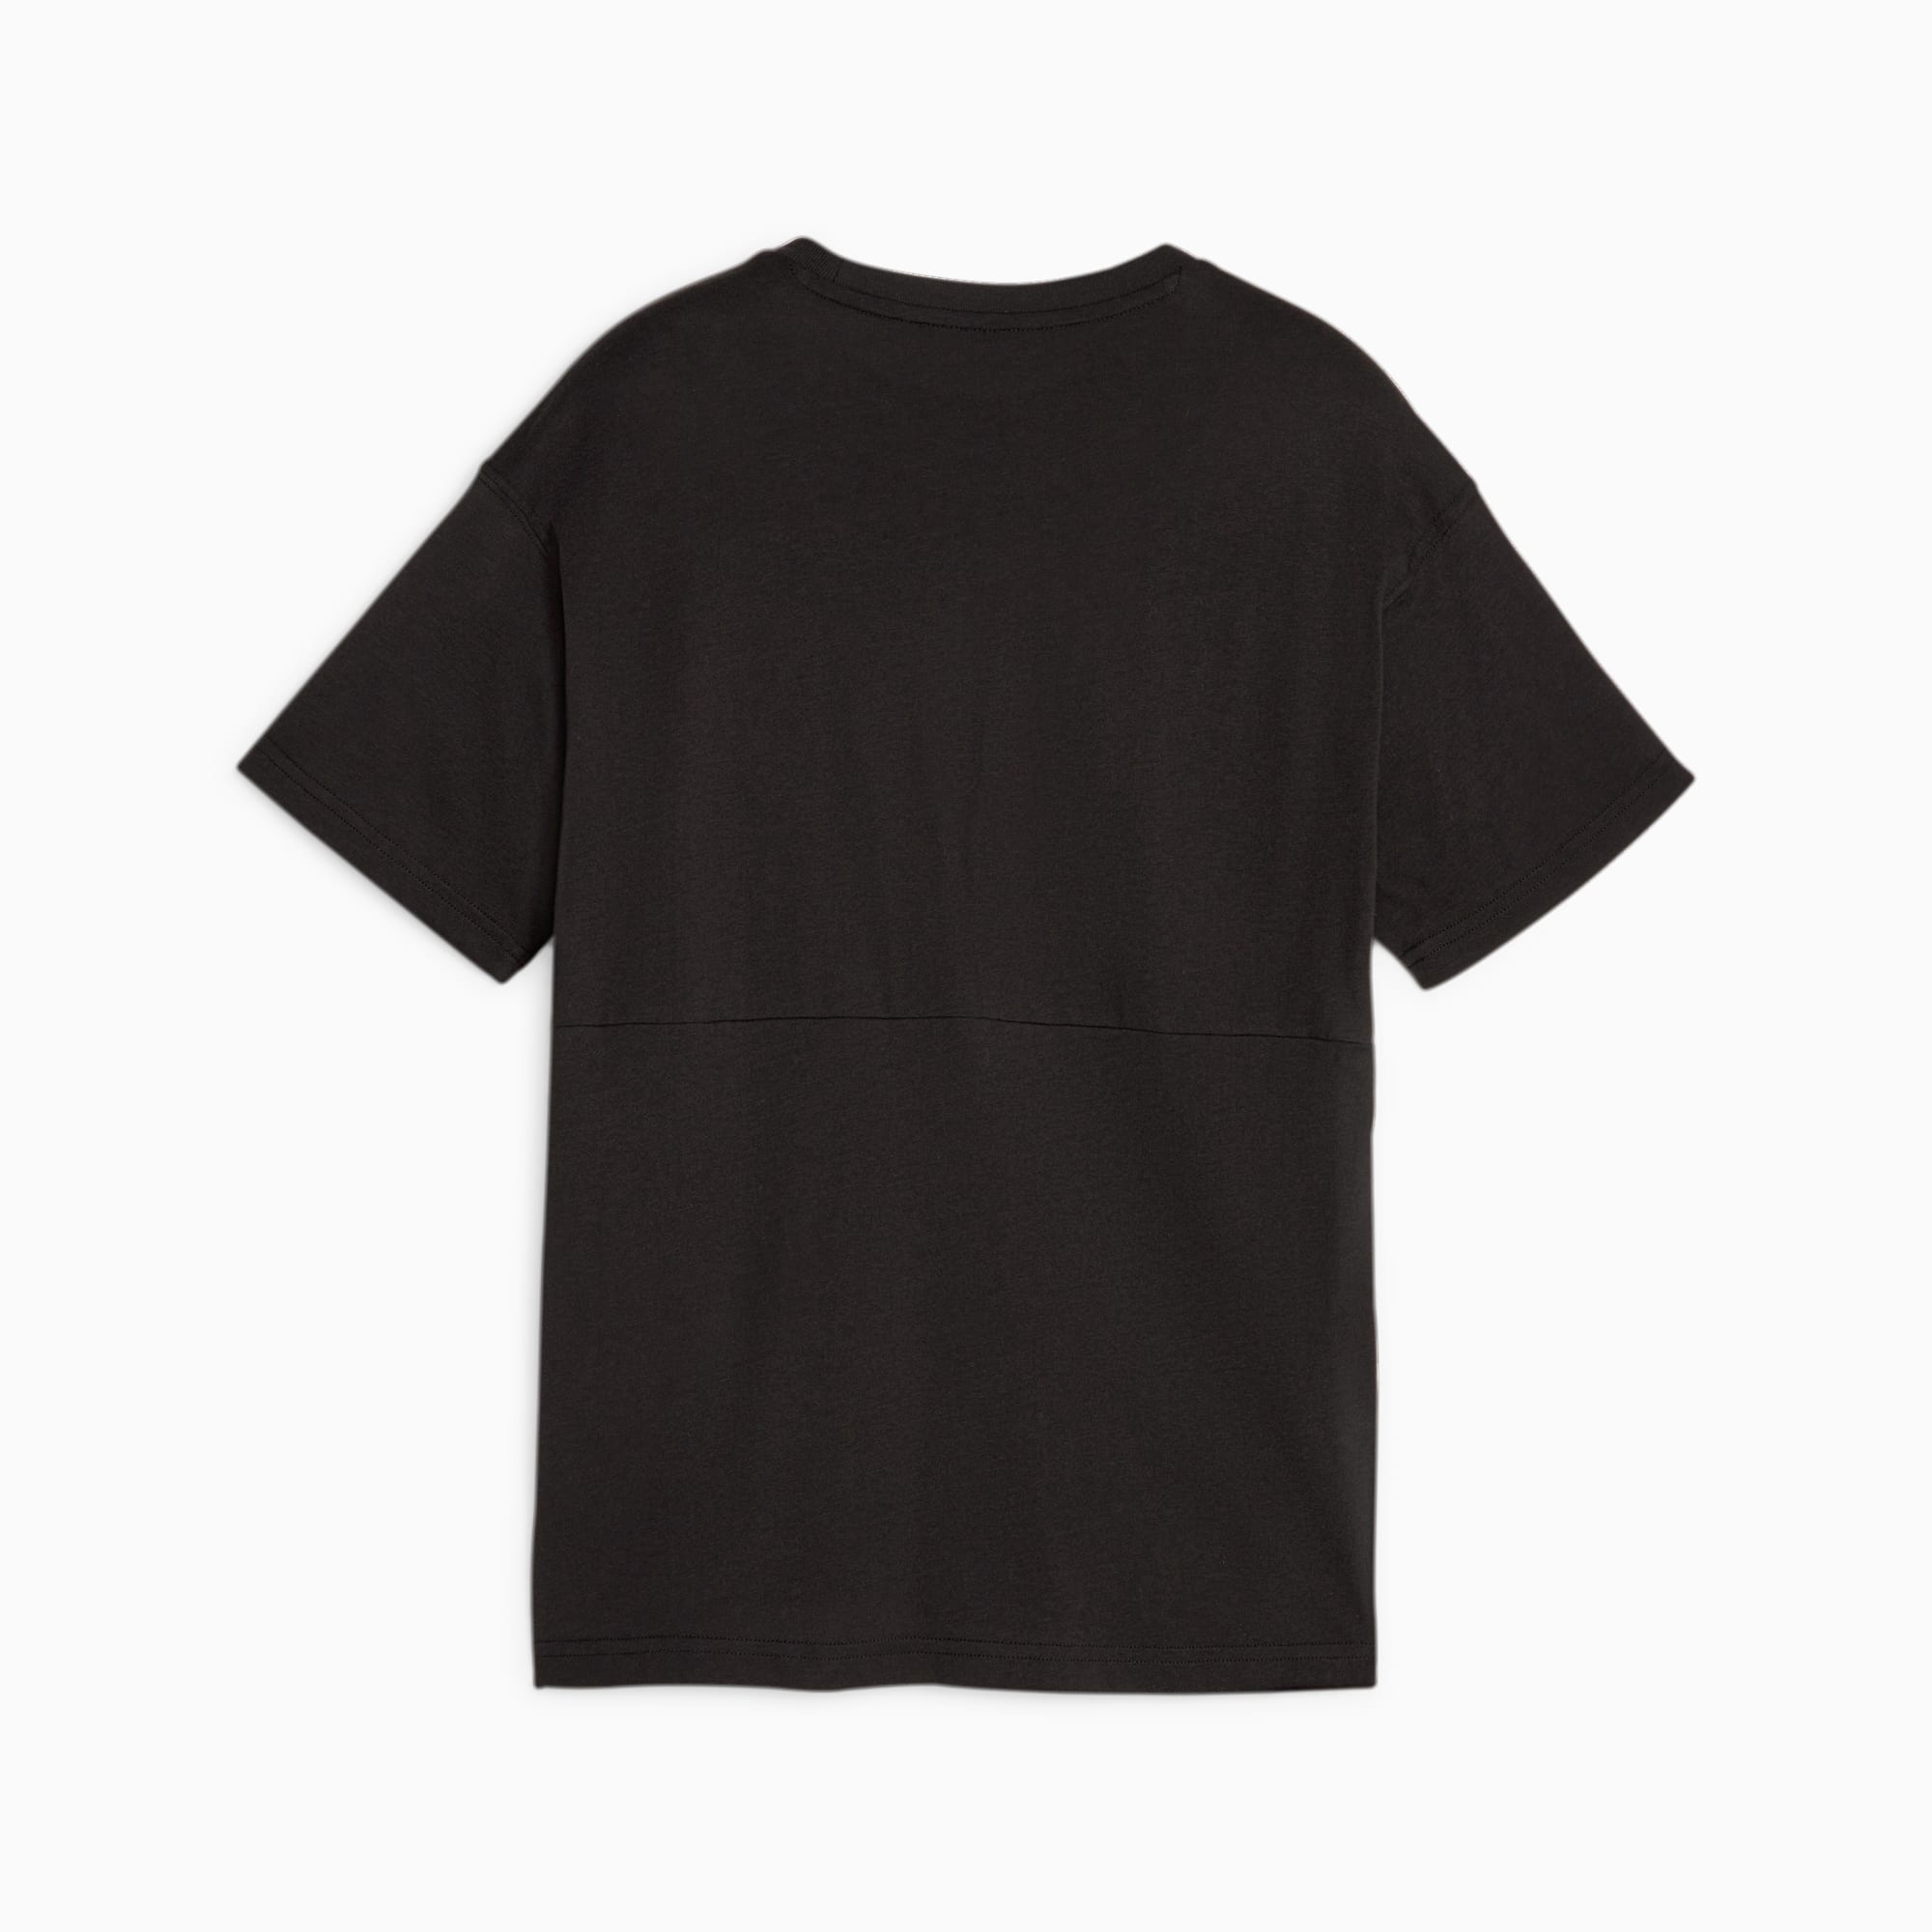 T-shirt in colour-blocking-design, model 'POWER'